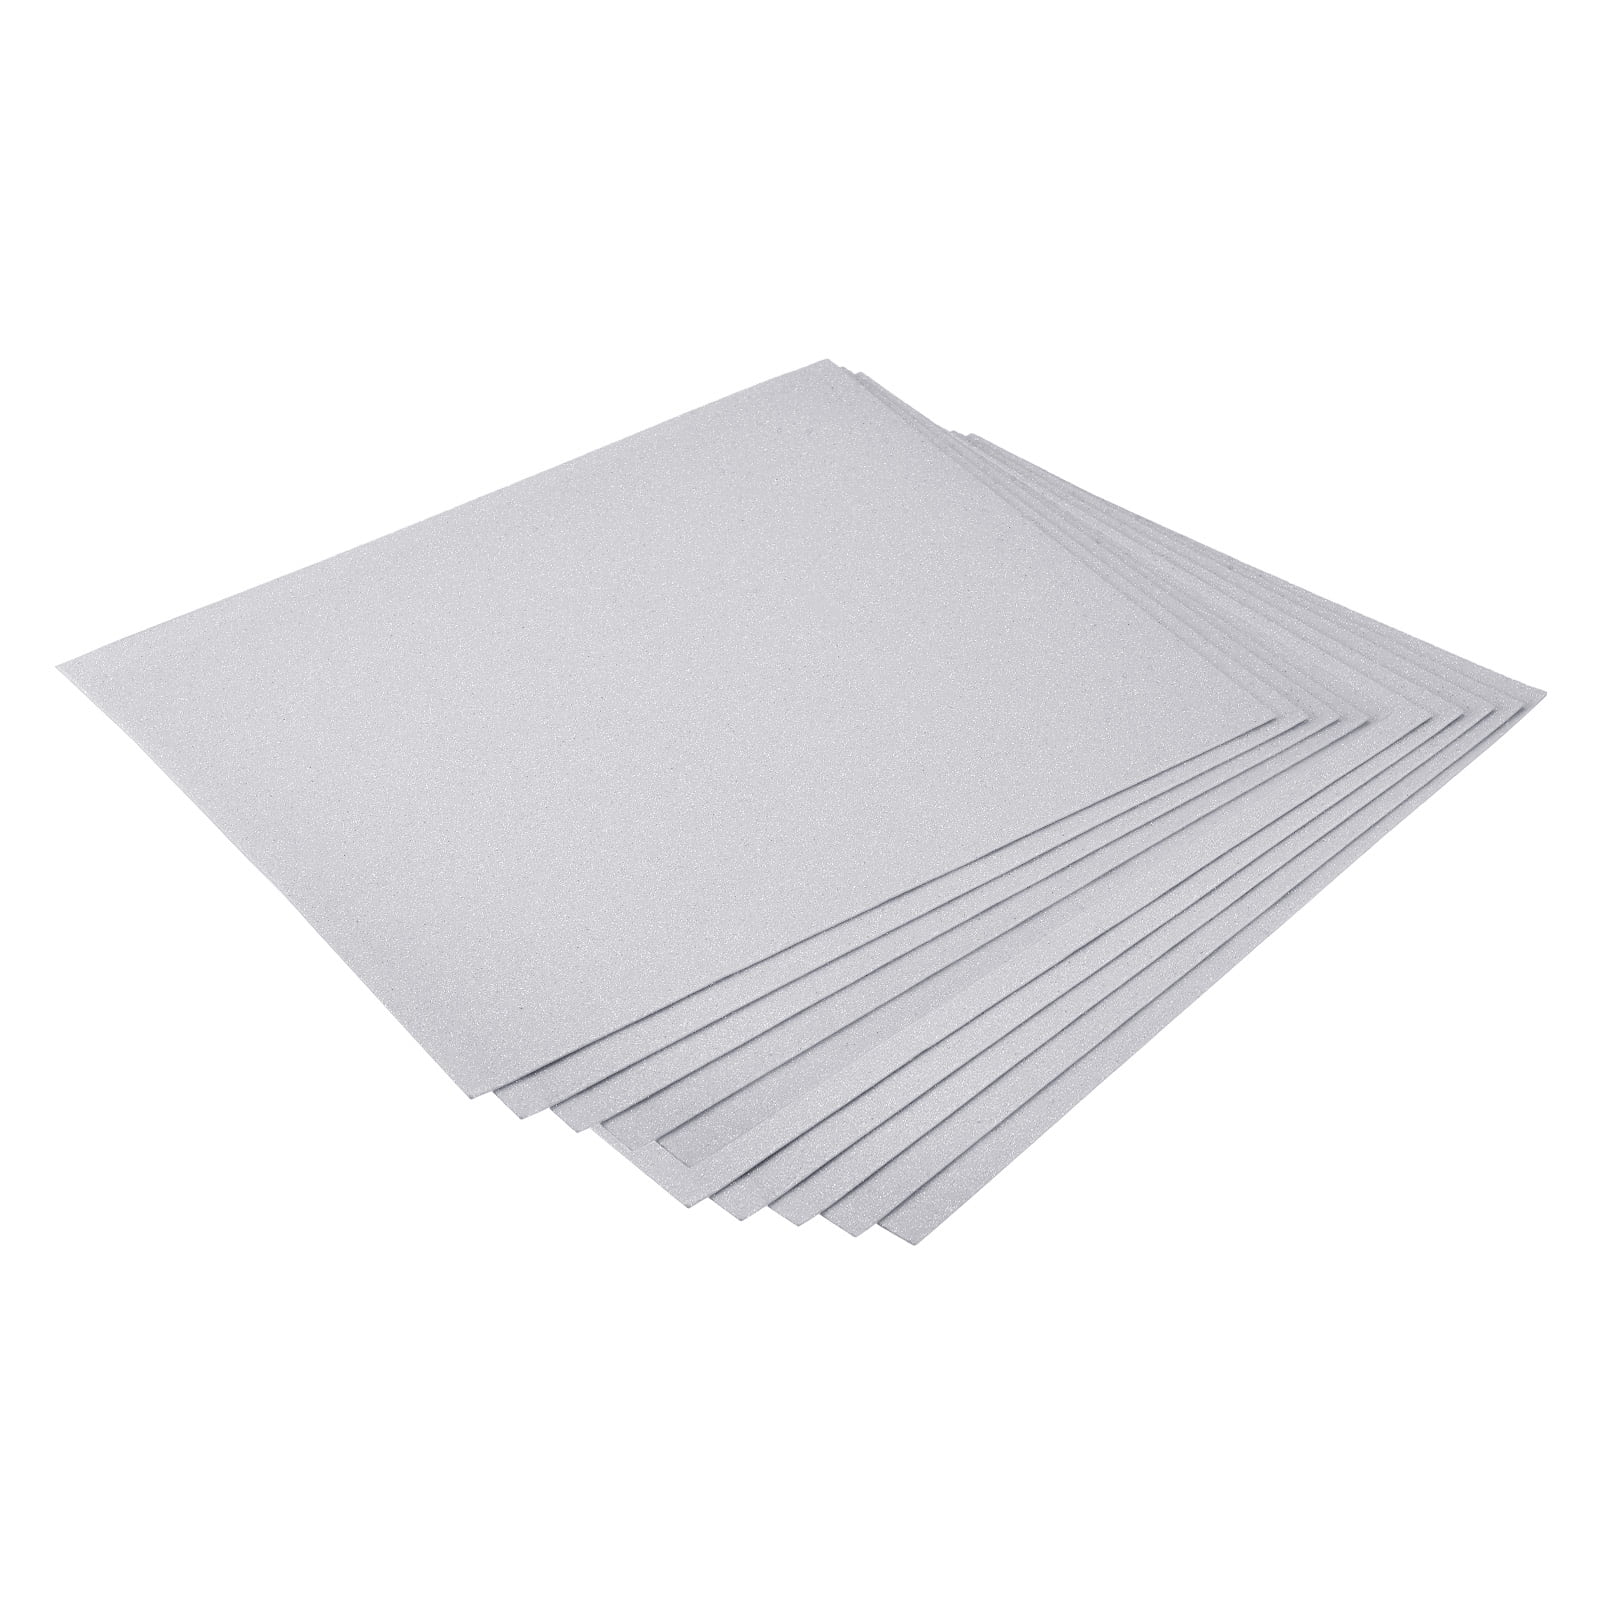 Palight White Foam PVC Sheet (Actual: 24-in x 48-in) in the Foam PVC Sheets  department at